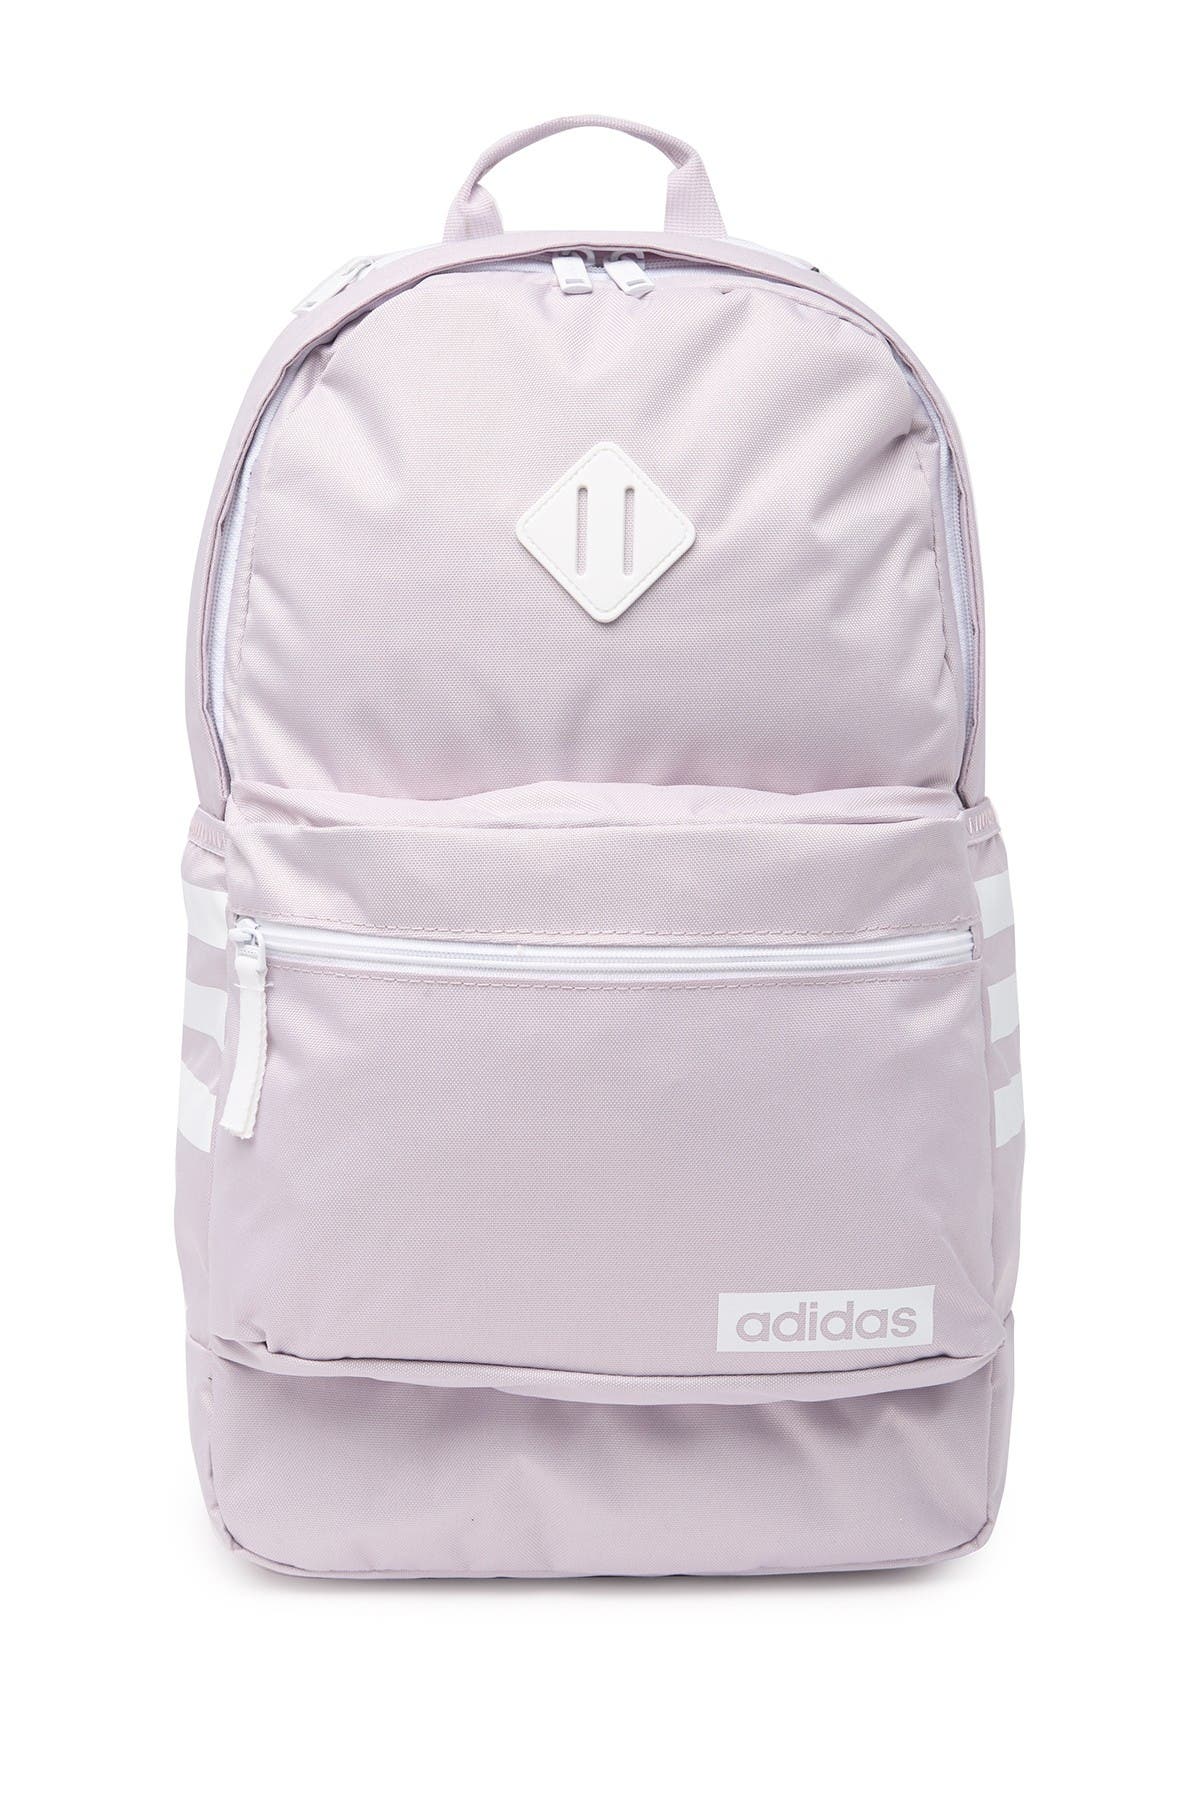 classic 3s iii laptop backpack